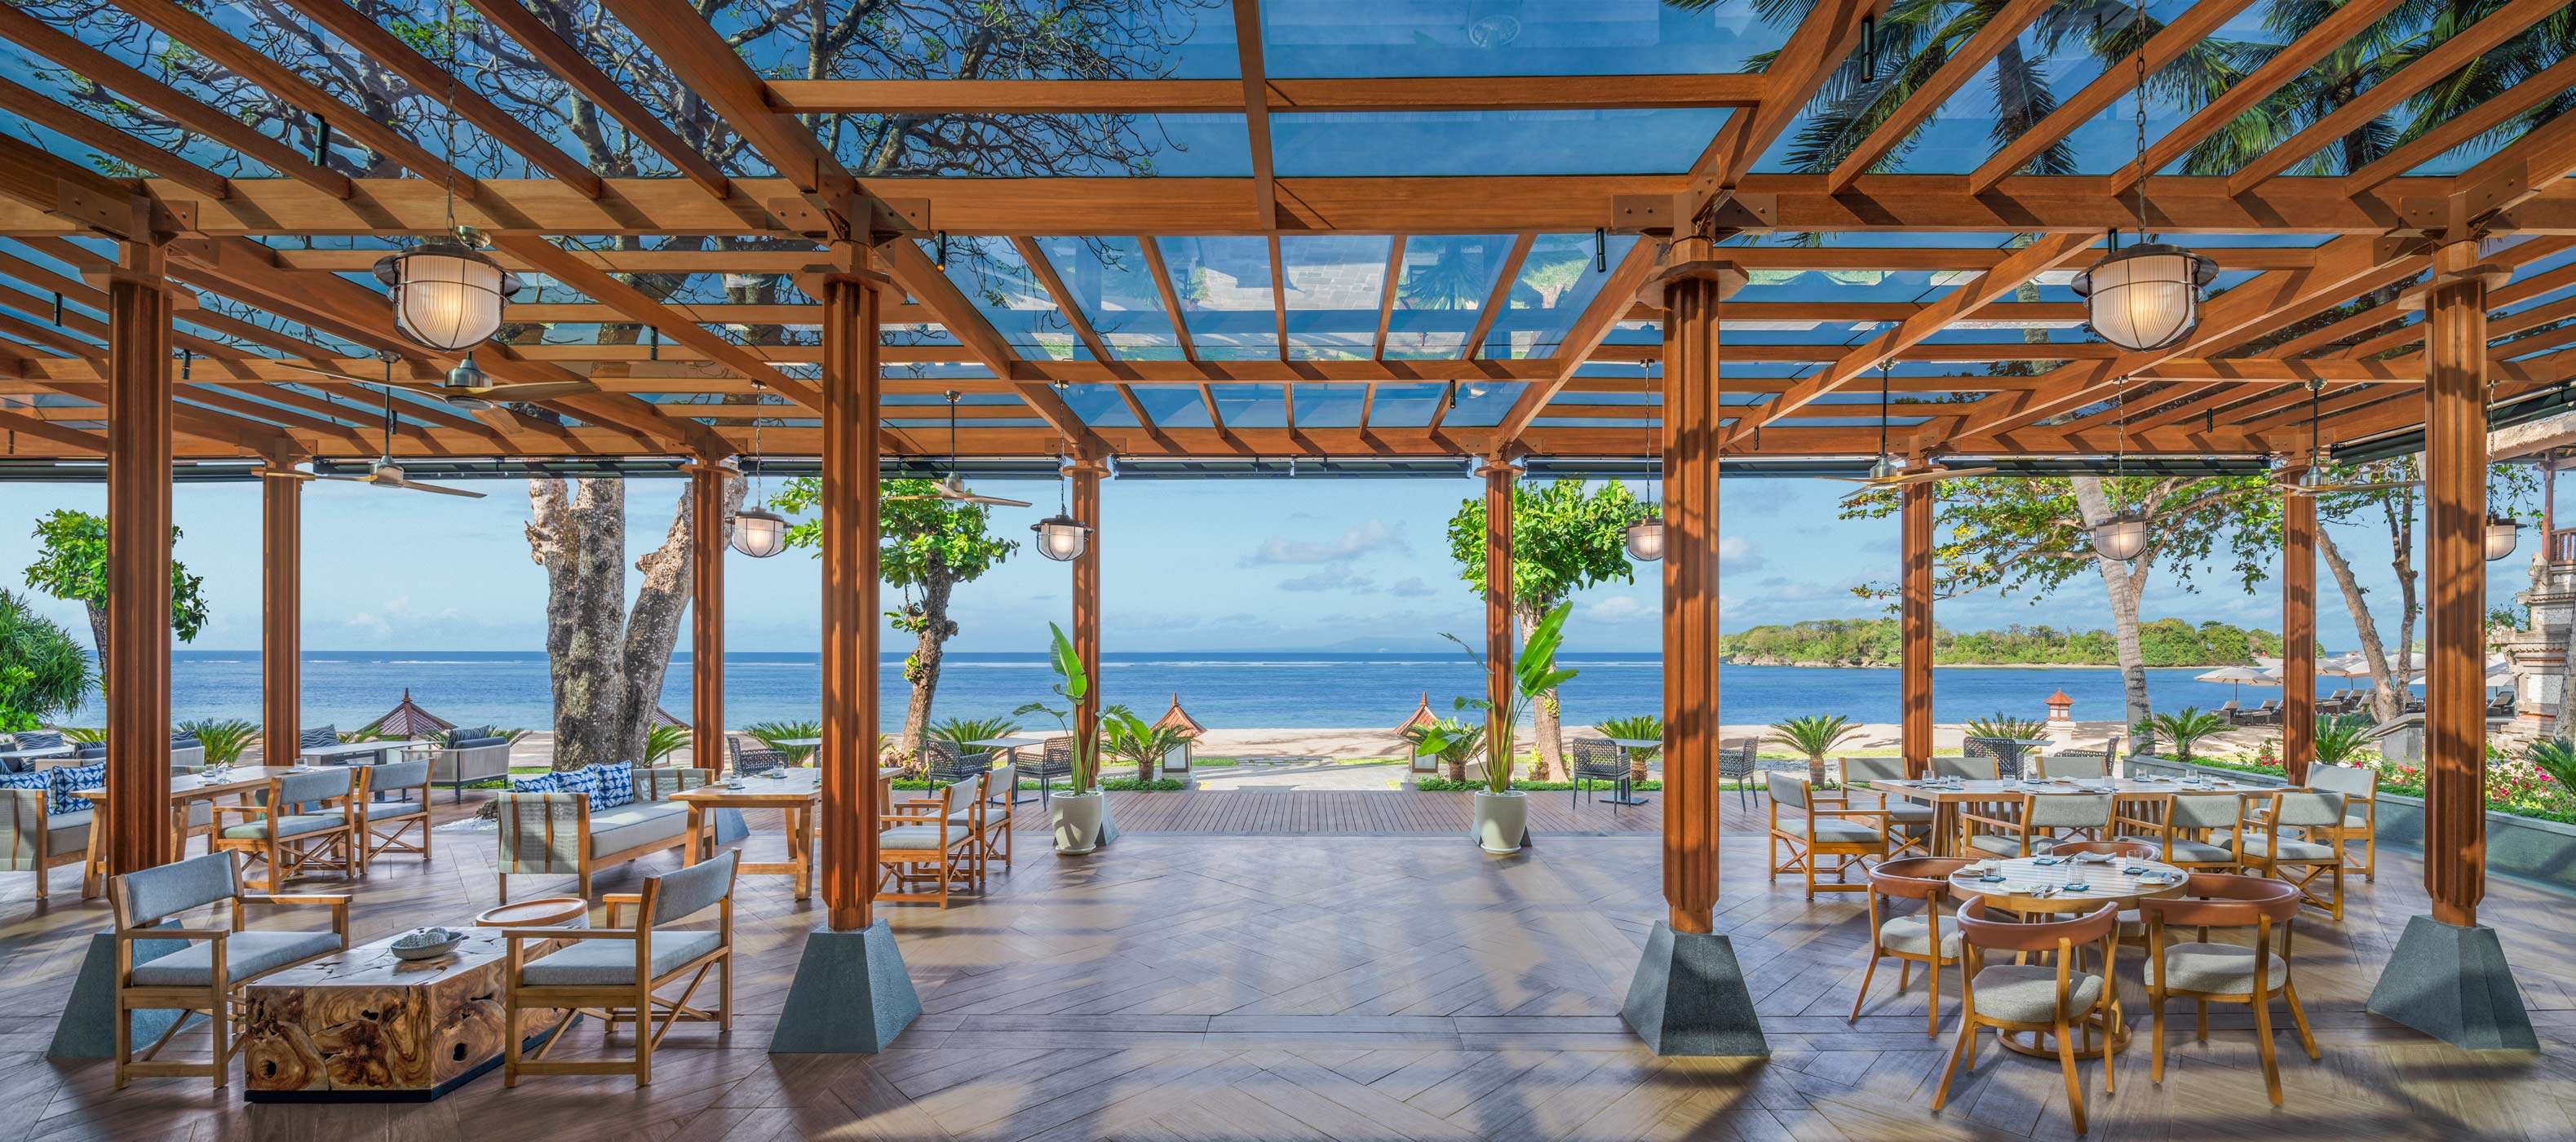 Arwana: A Memorable Beachfront Dining Experience In Nusa Dua